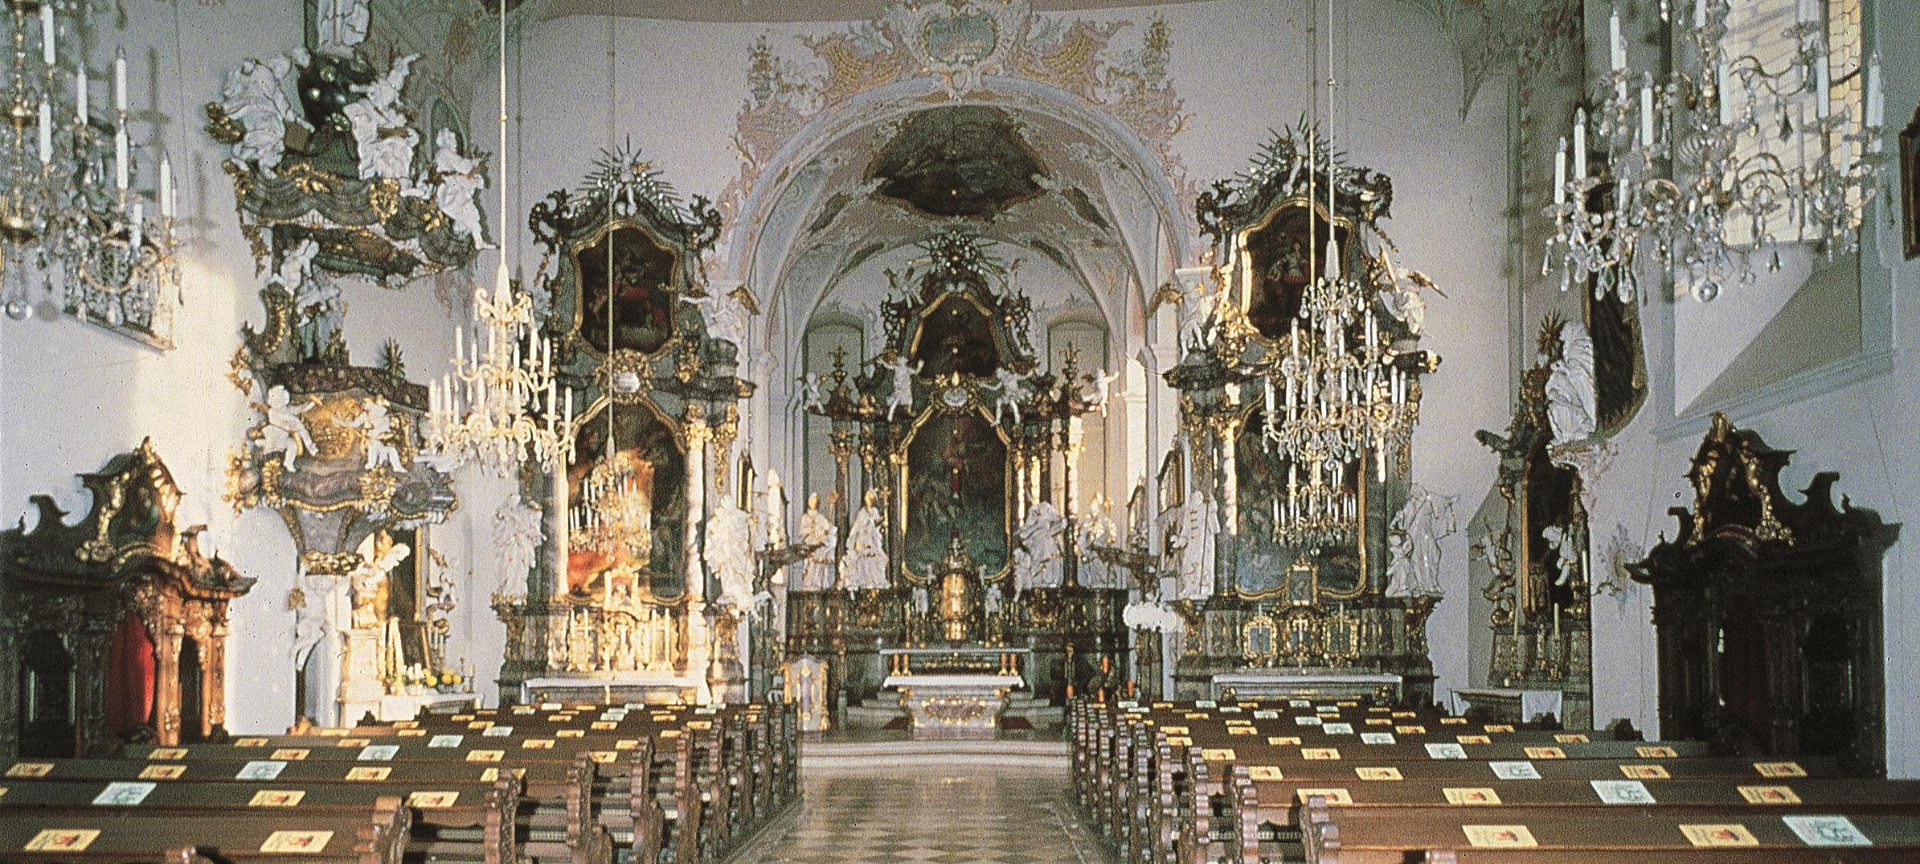 Klosterkirche_Stuck.jpg